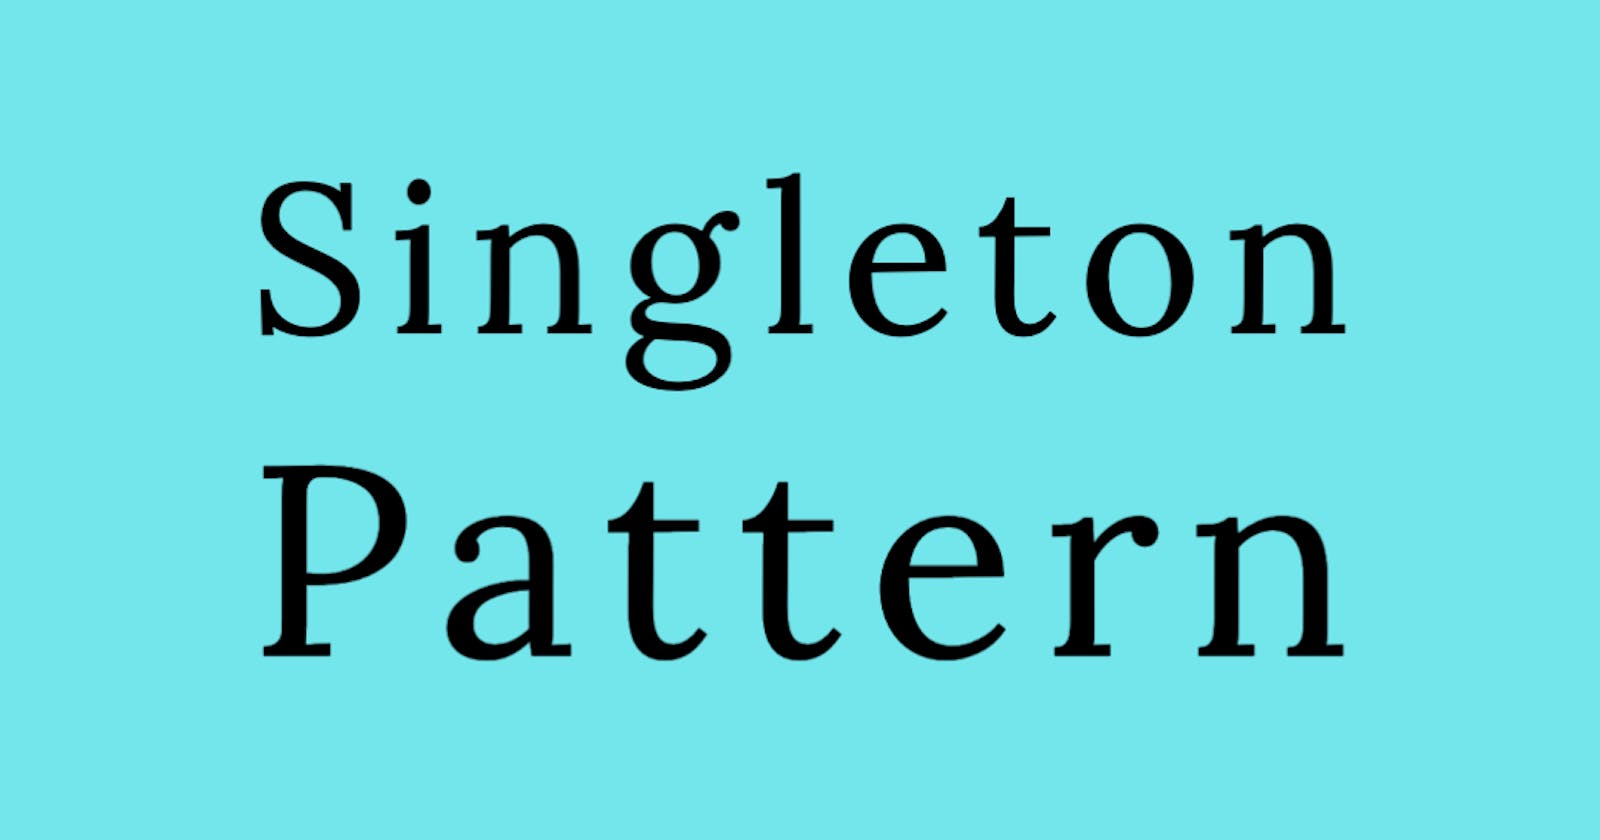 Notes: Go Design Patterns - Singleton Pattern